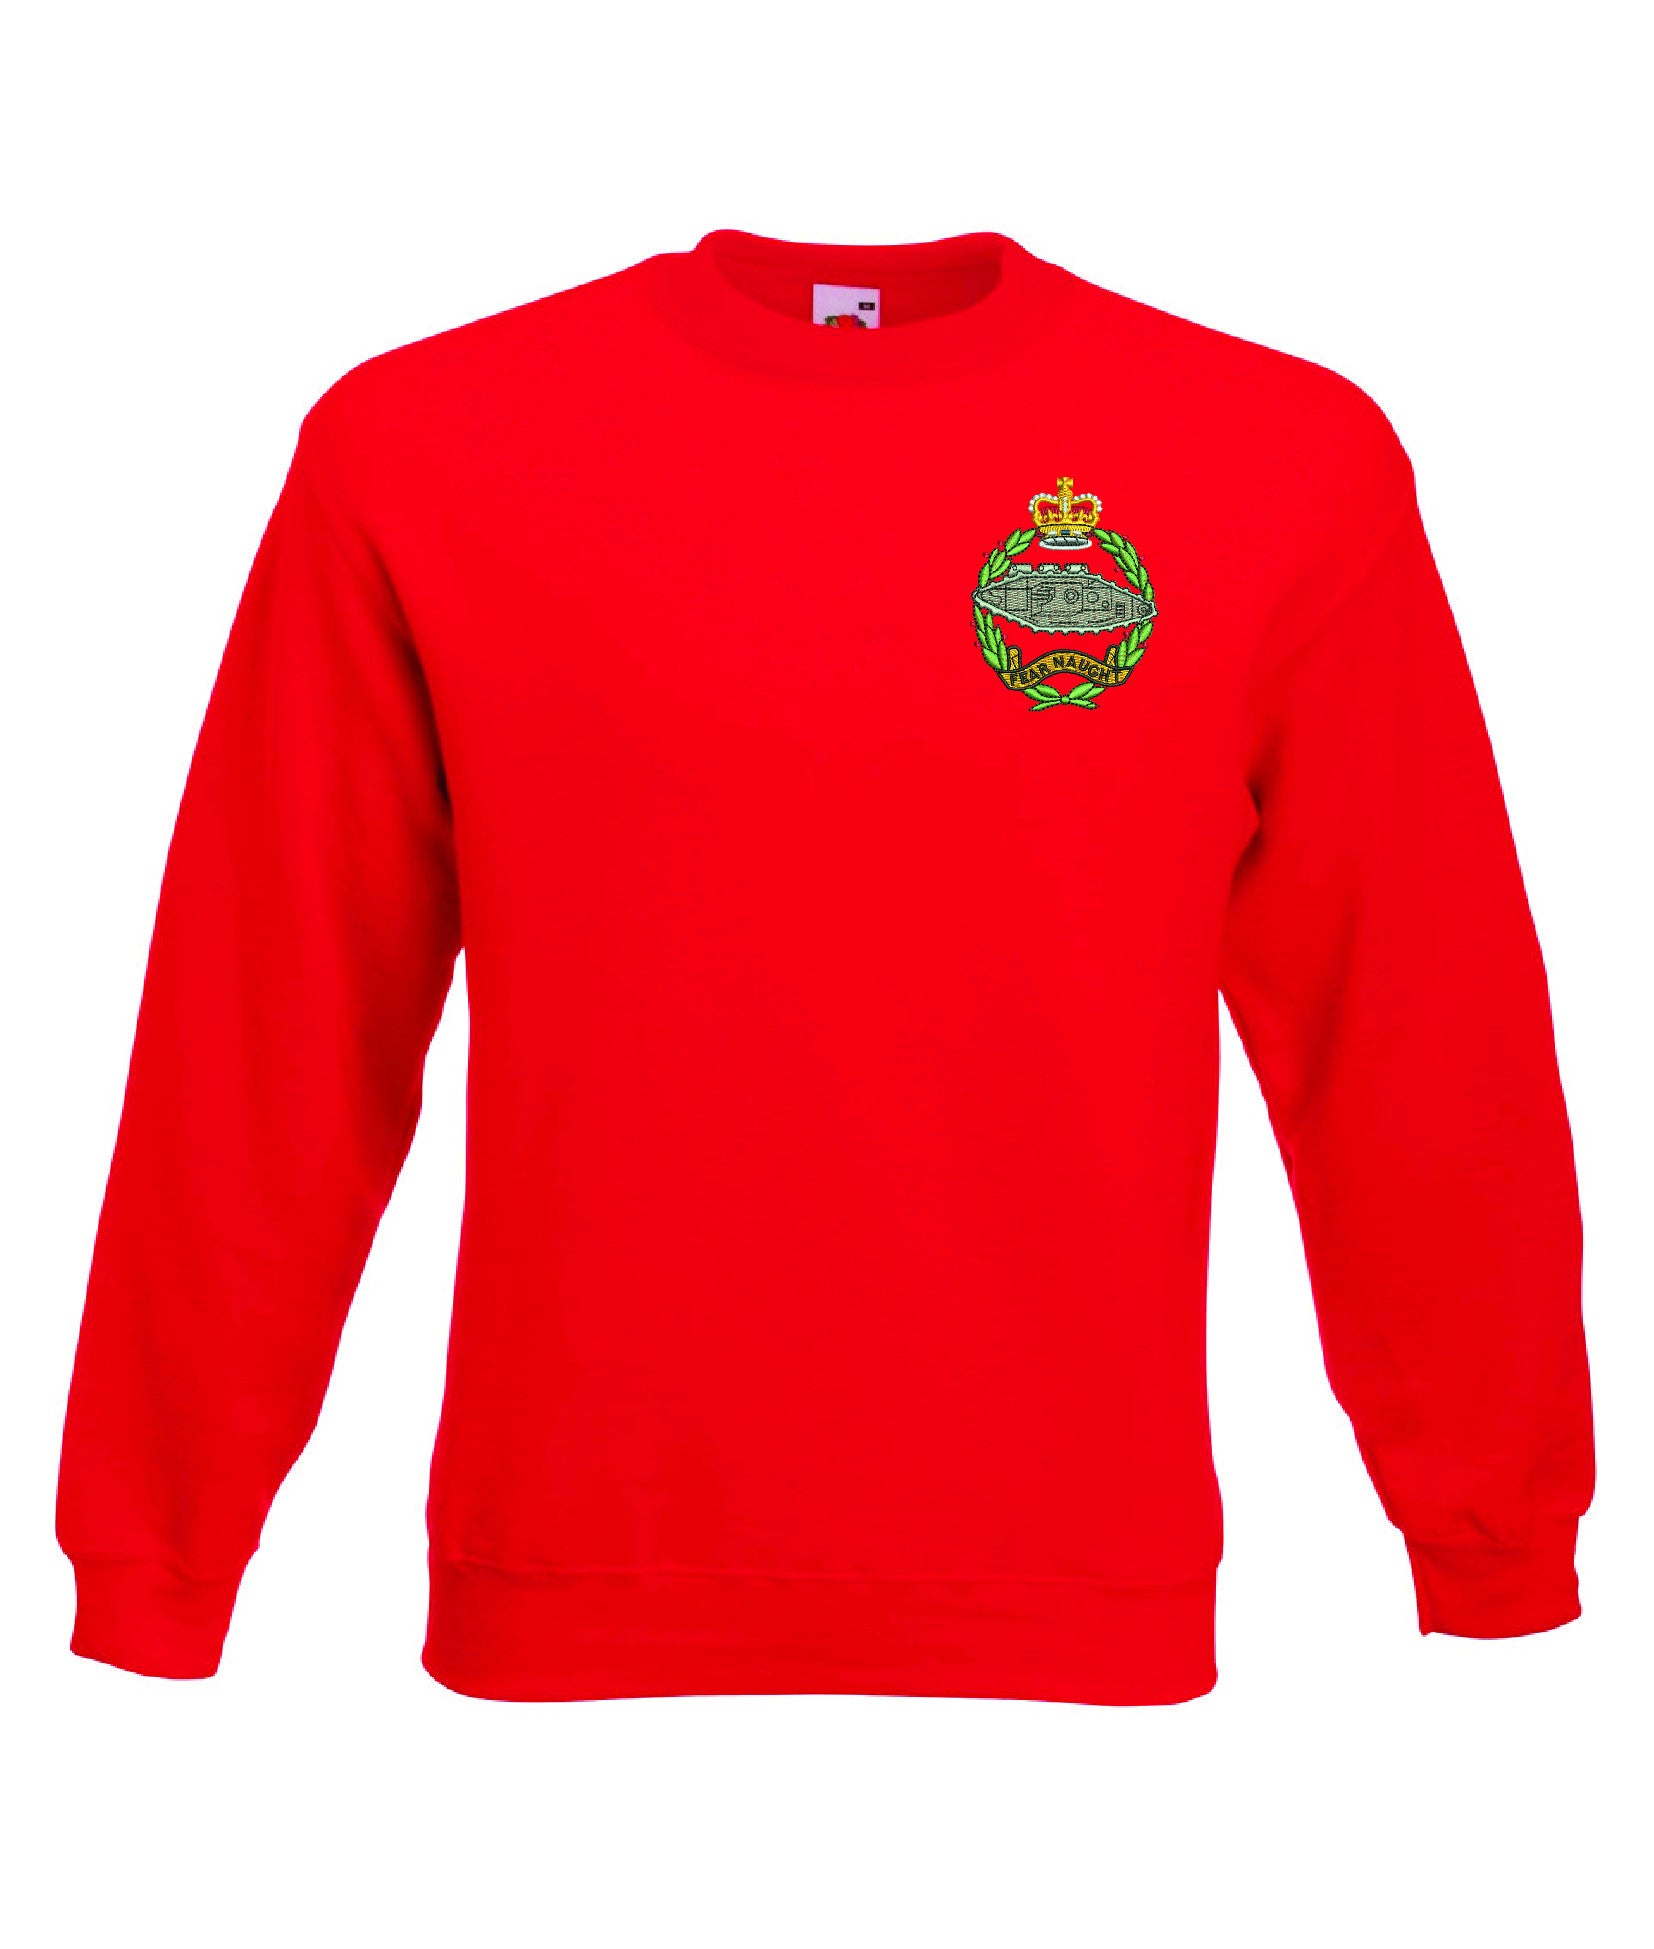 Royal Tank Regiment Sweatshirts